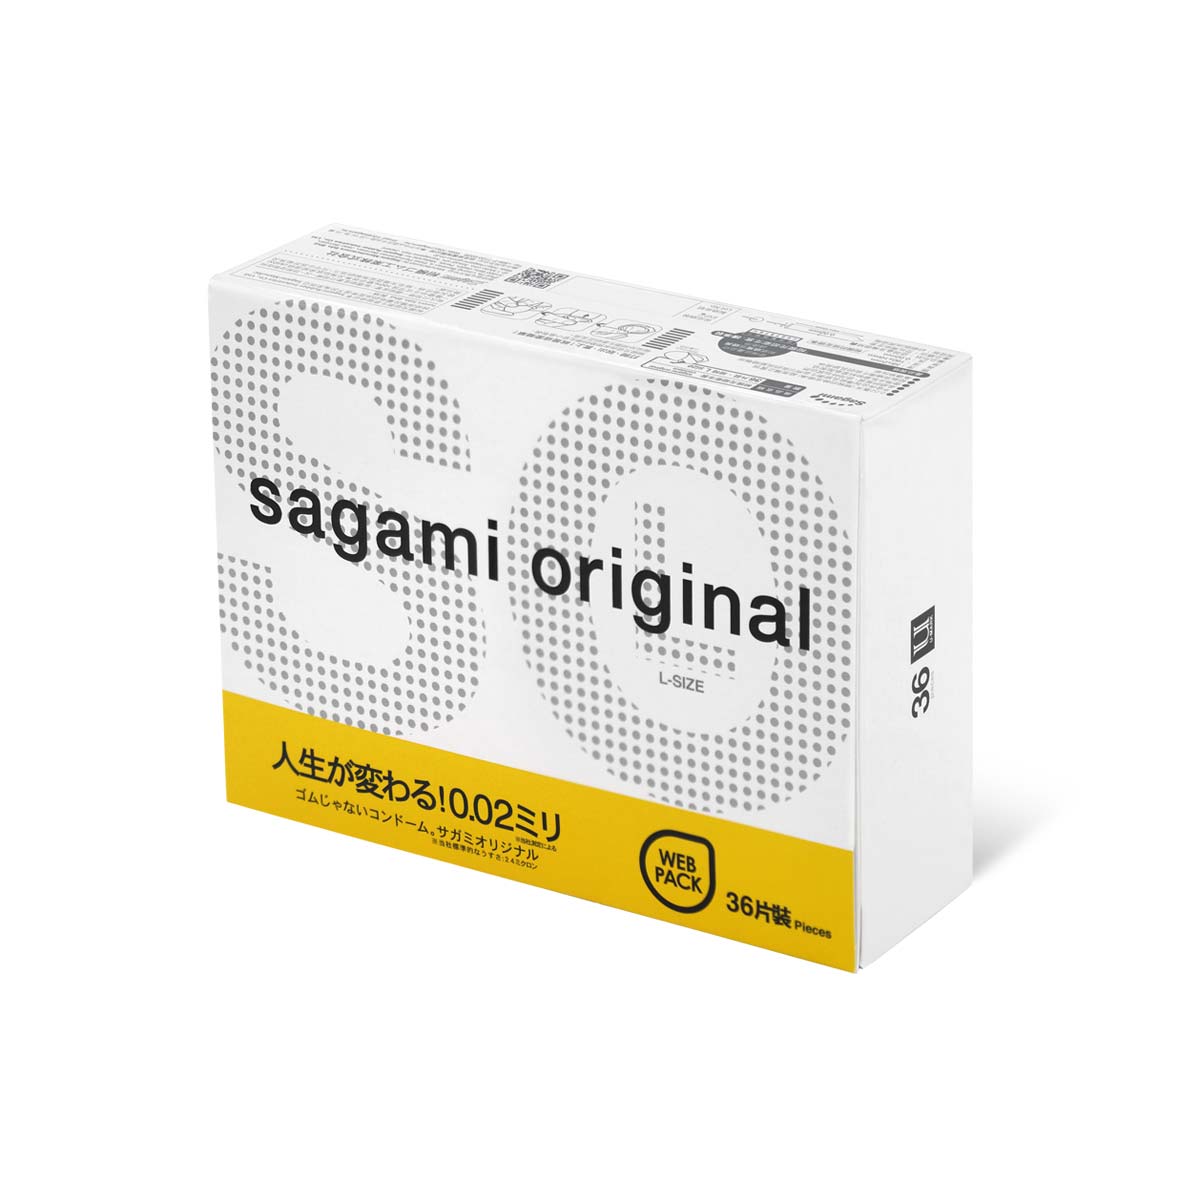 Sagami Original 0.02 L-size 58mm 36's Pack PU Condom (Defective Packaging)-thumb